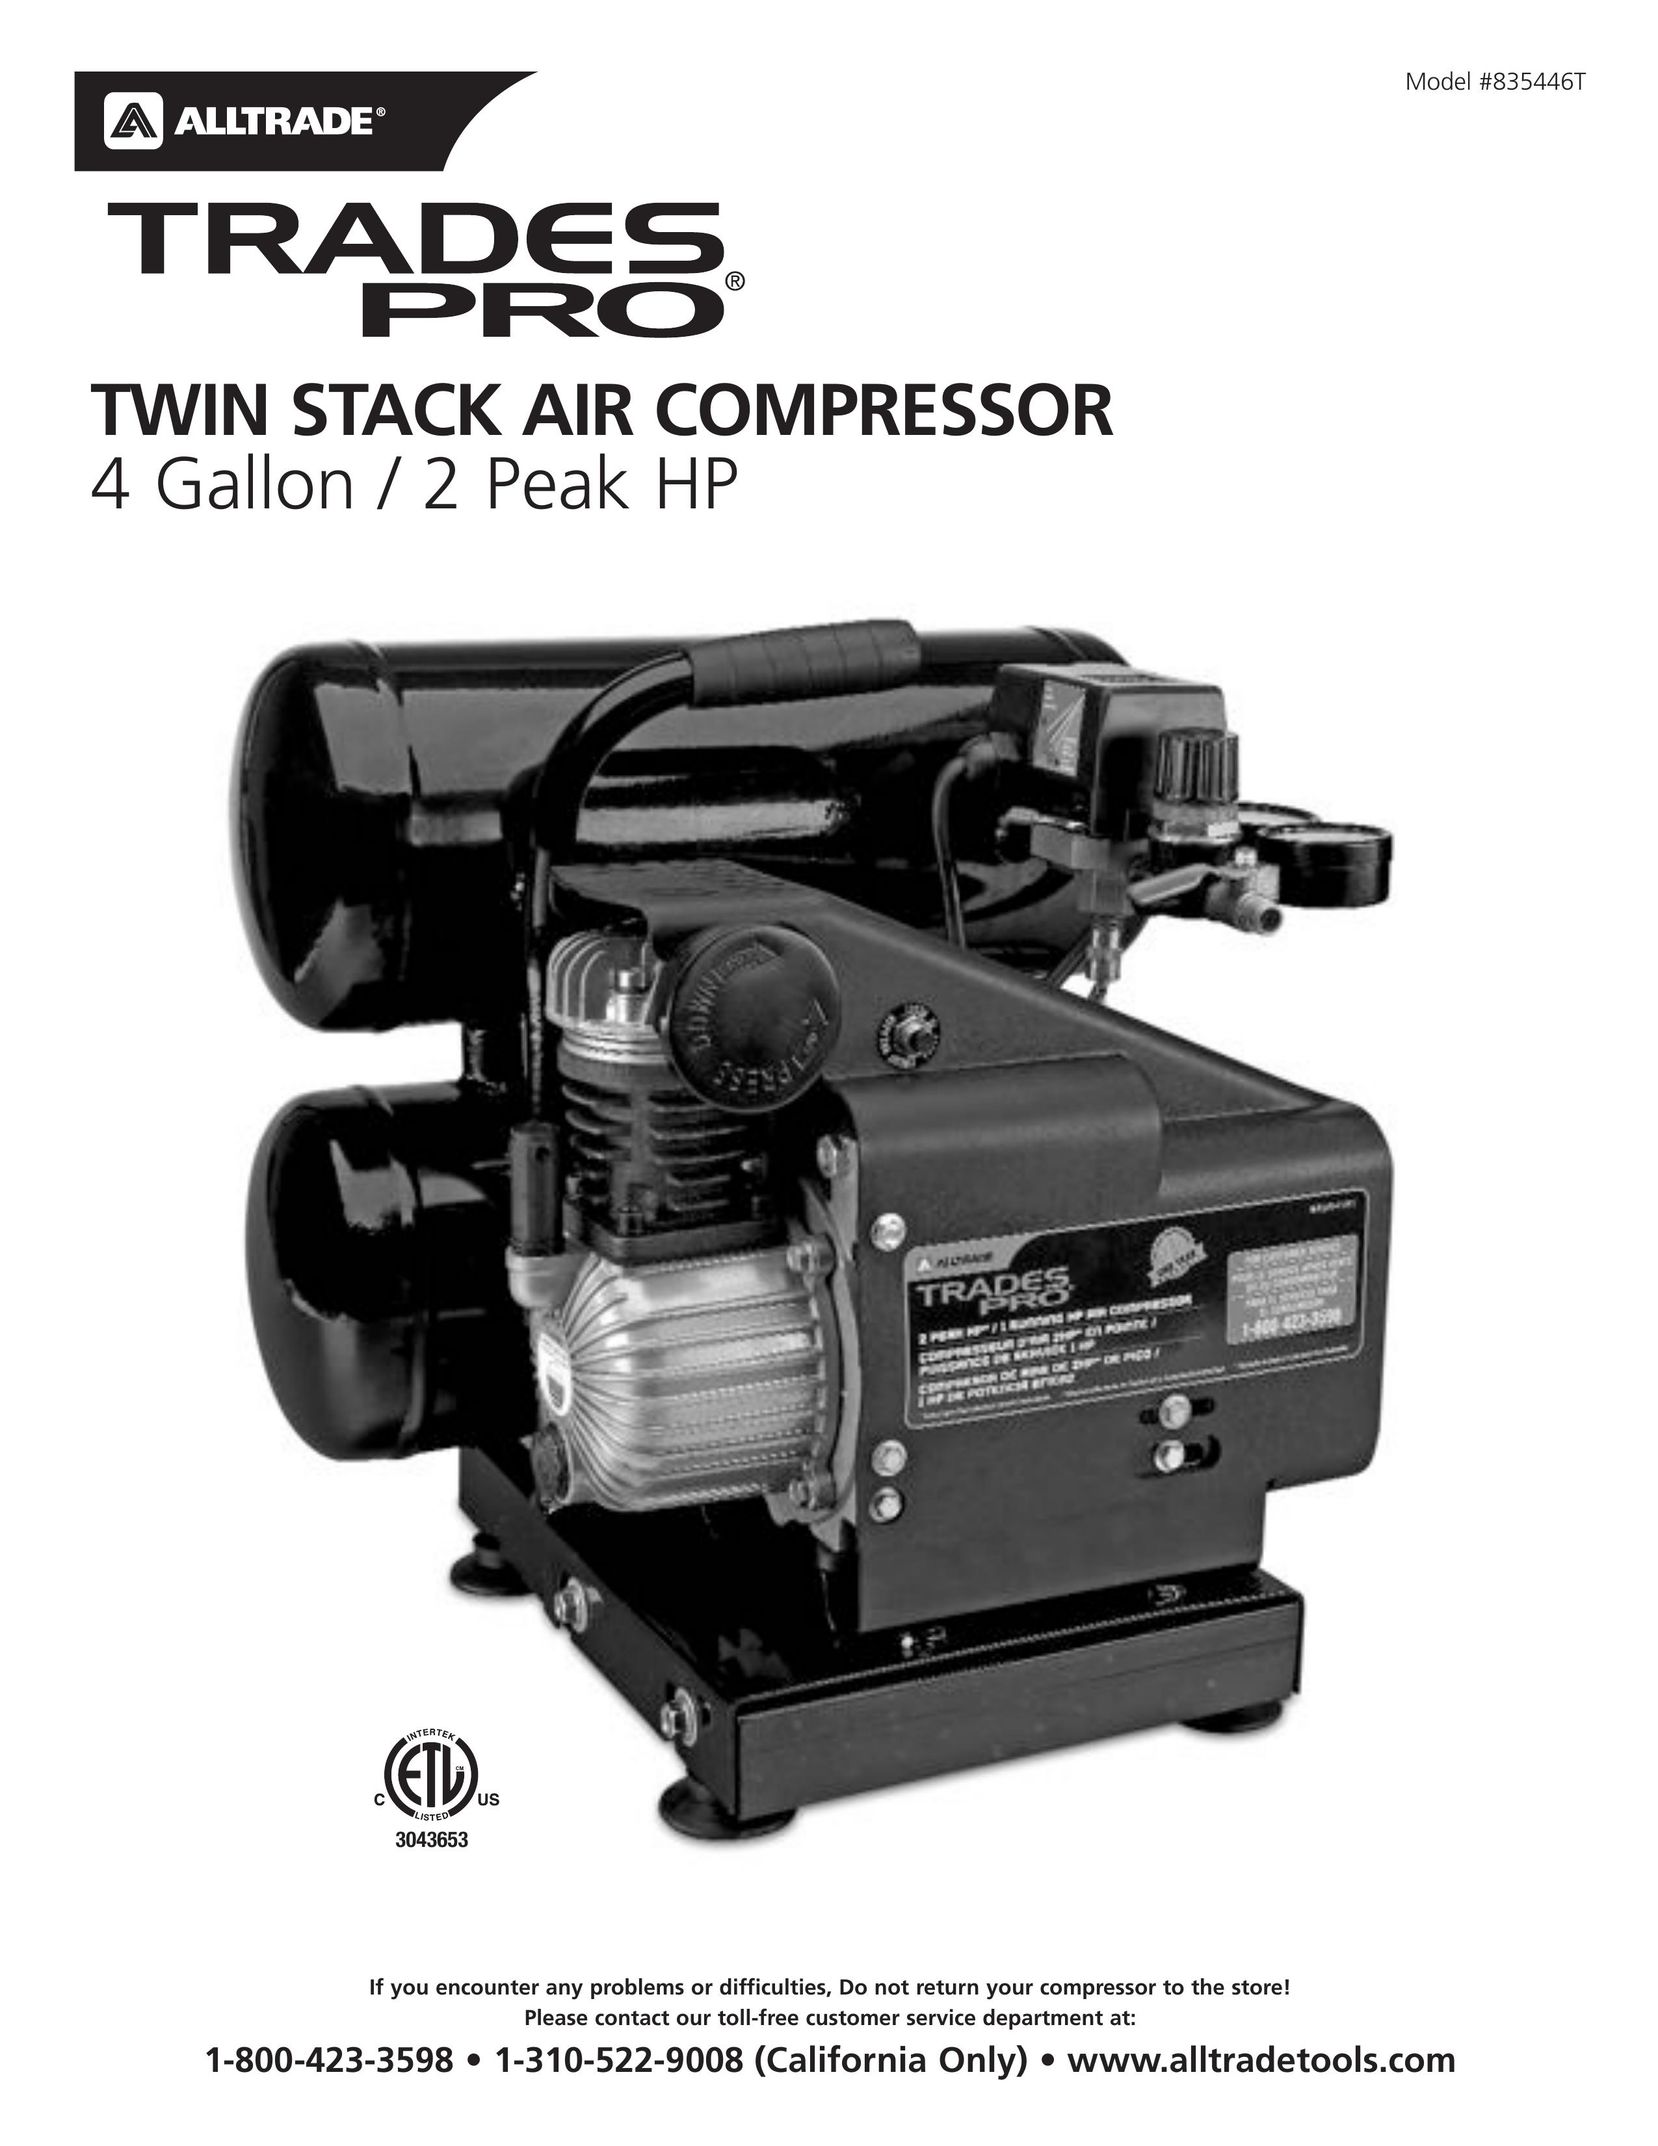 AllTrade 835446 Air Compressor User Manual